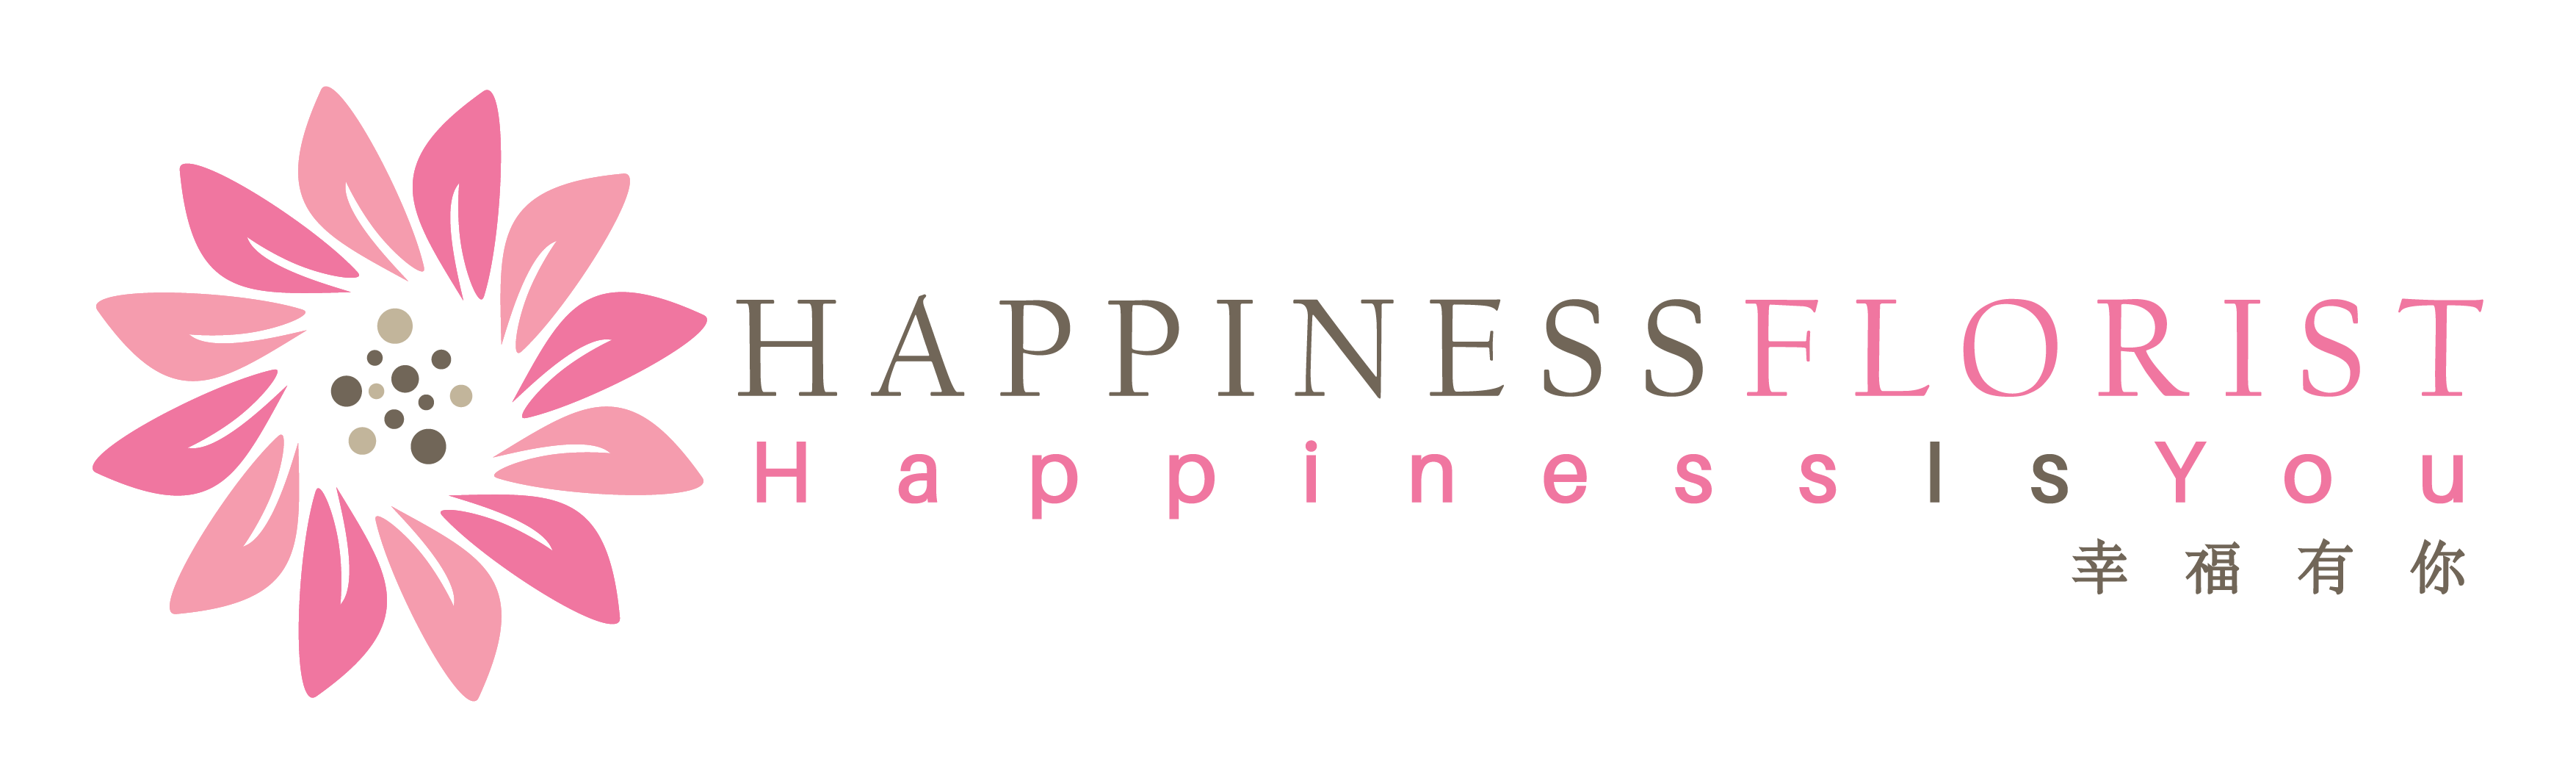 HAPPINESS FLORIST LOGO-01 (1).png